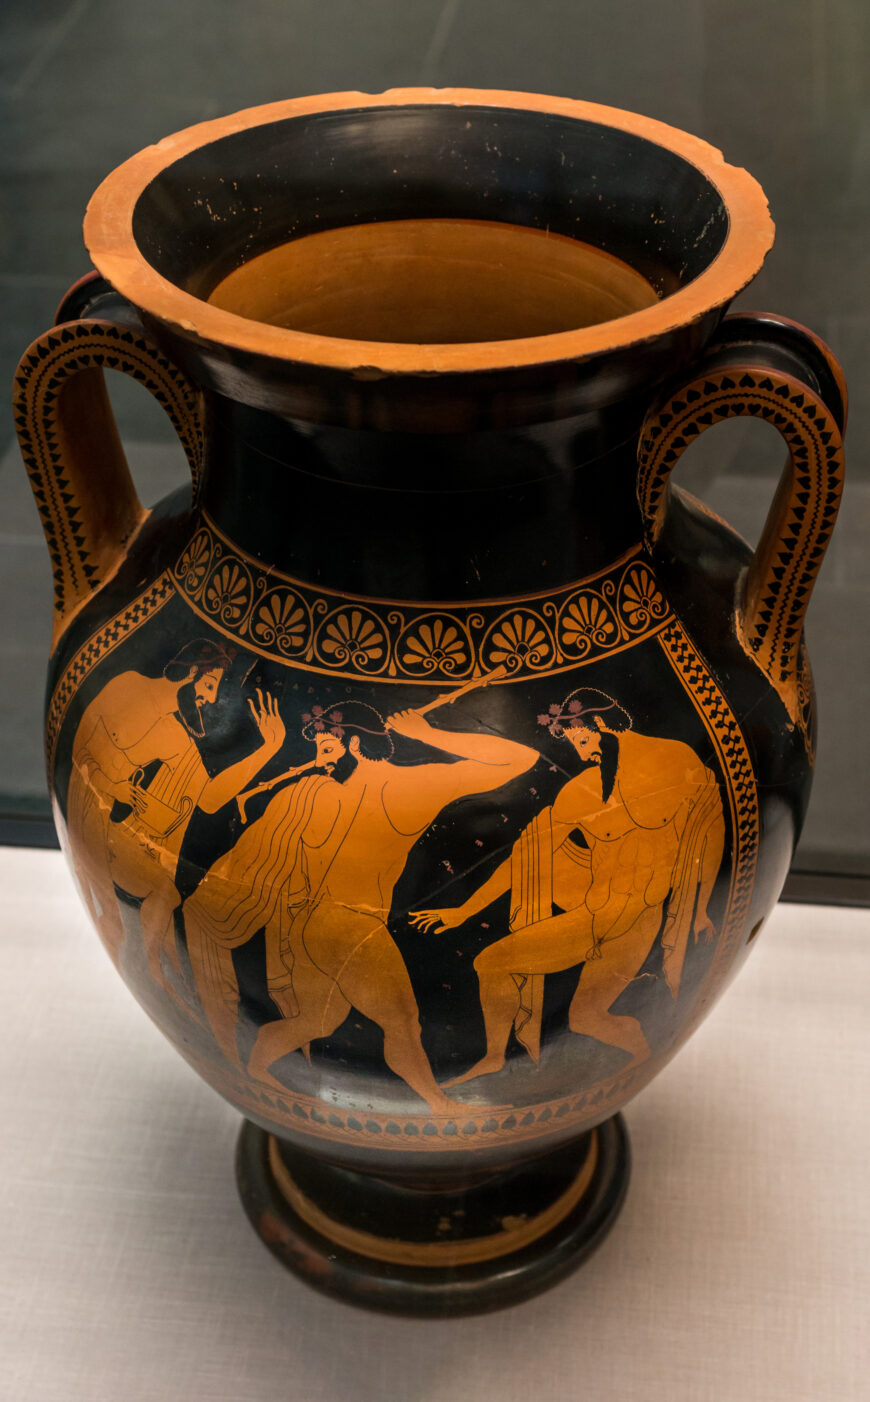 Euthymides, Three Revelers (Athenian red-figure amphora), c. 510 B.C.E., 61 cm high (Staatliche Antikensammlungen, Munich; photo: ArchaiOptix, CC BY-SA 4.0)